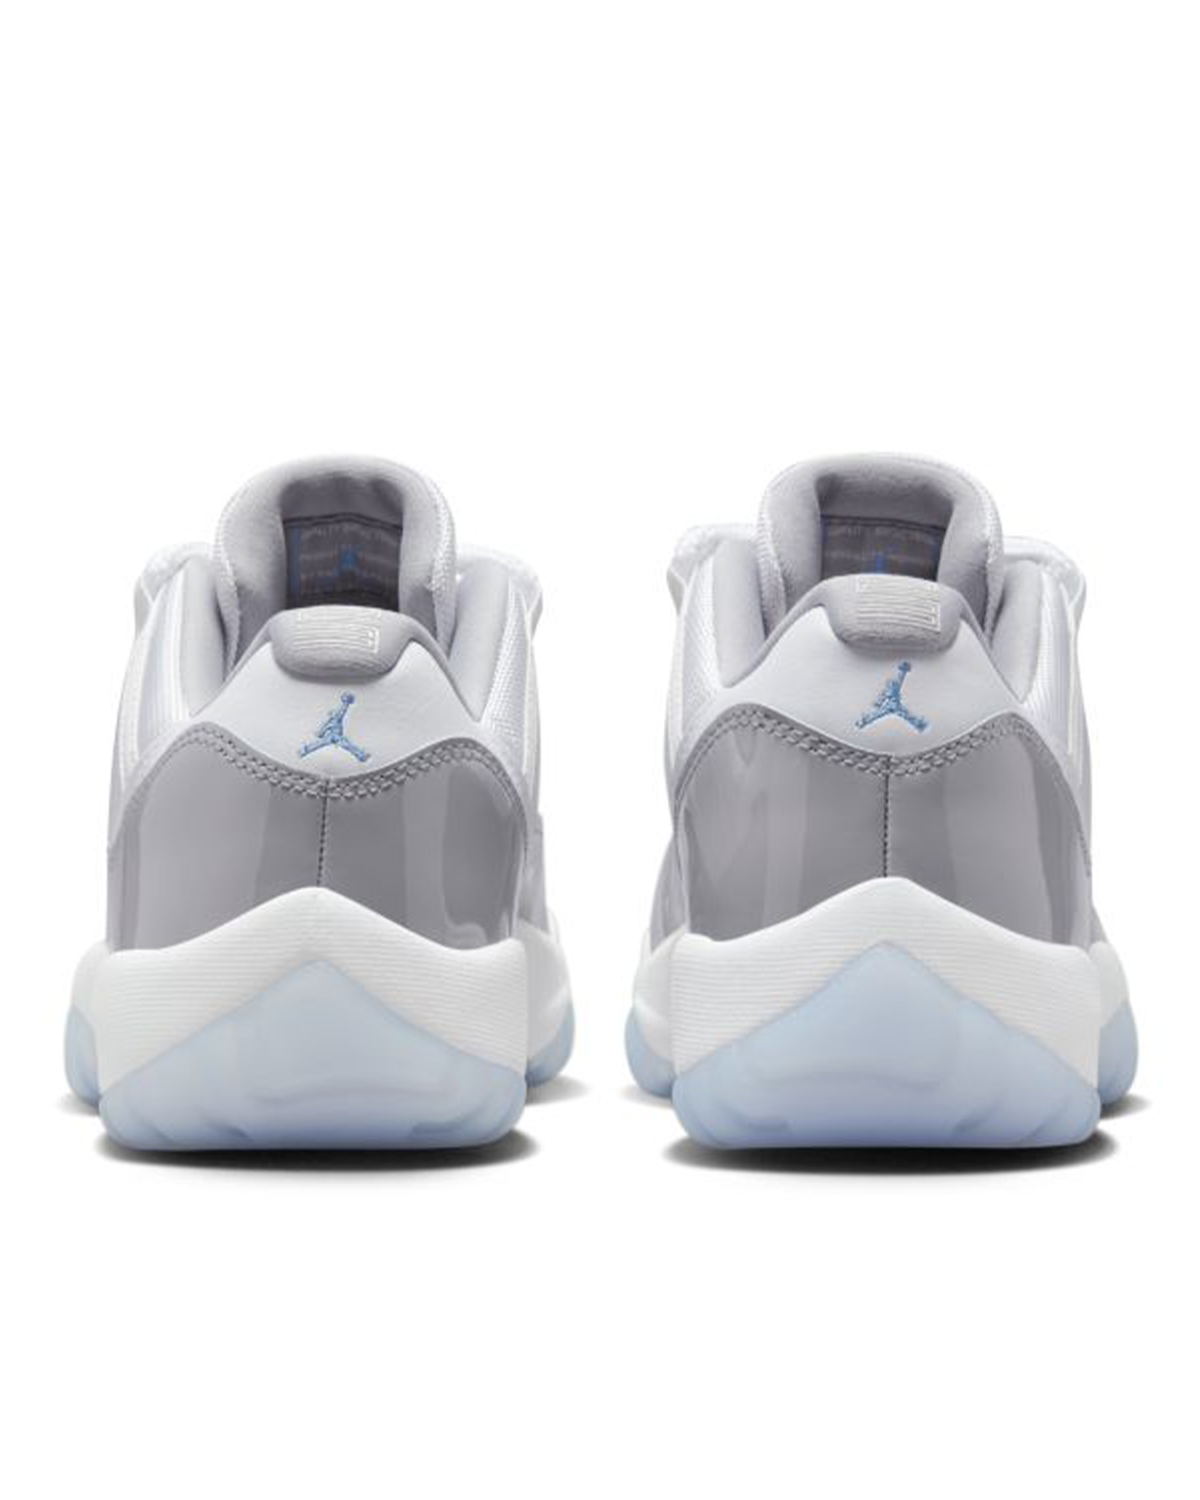 Air Jordan 11 Retro Low White/University Blue/Cement